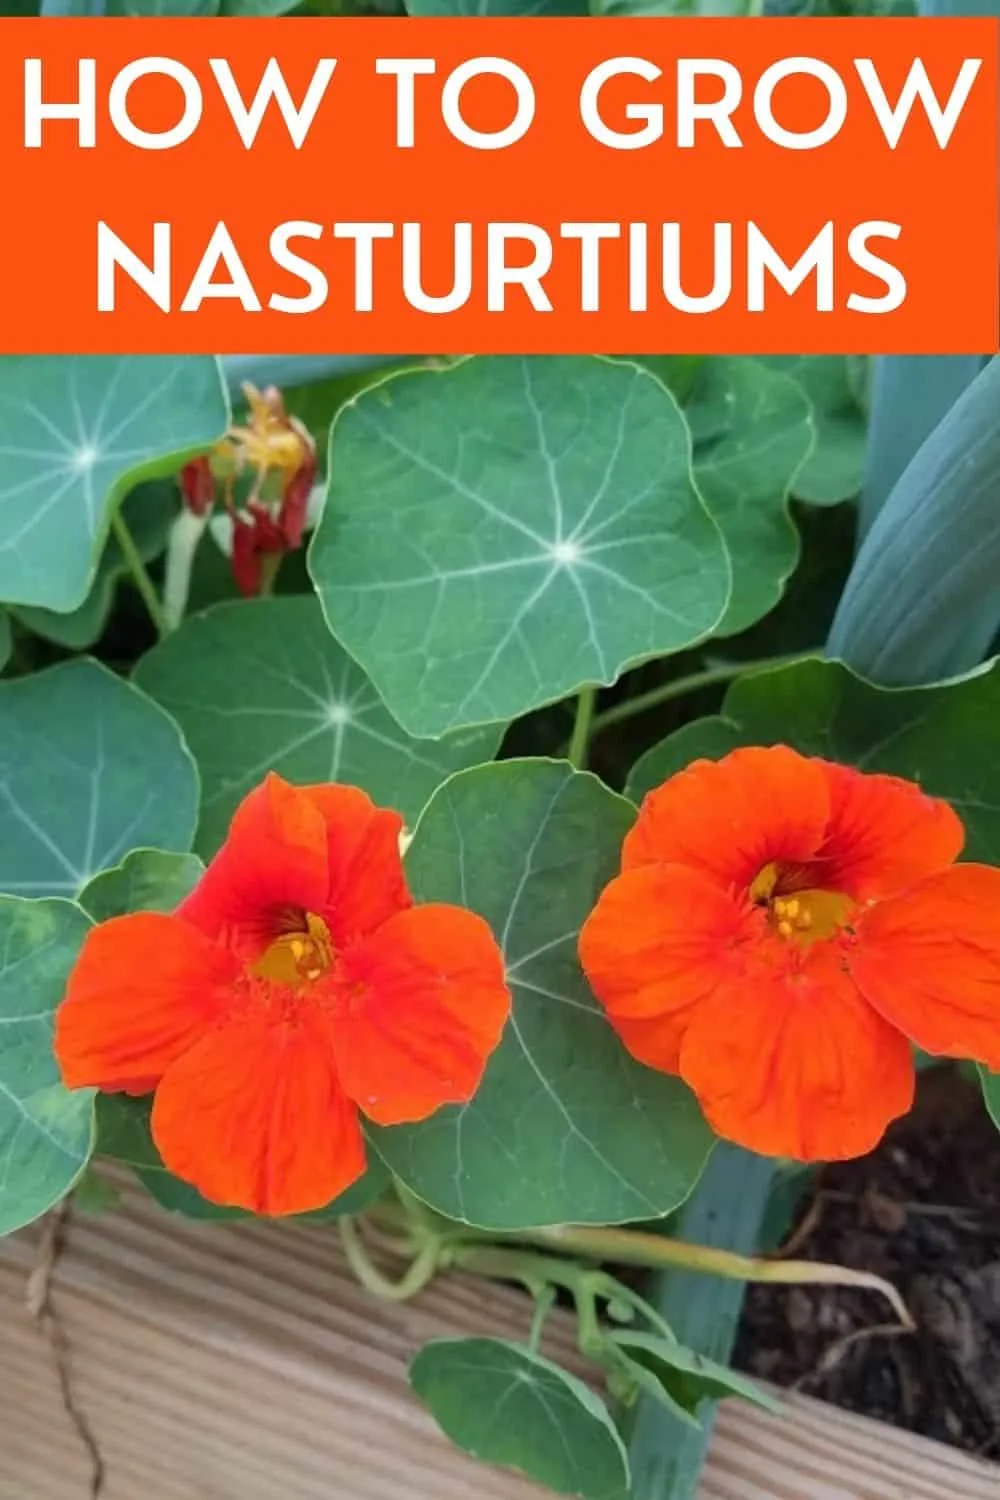 How To Grow Nasturtiums - A Guide To Planting, Growing, And Harvesting  Nasturtium Plants